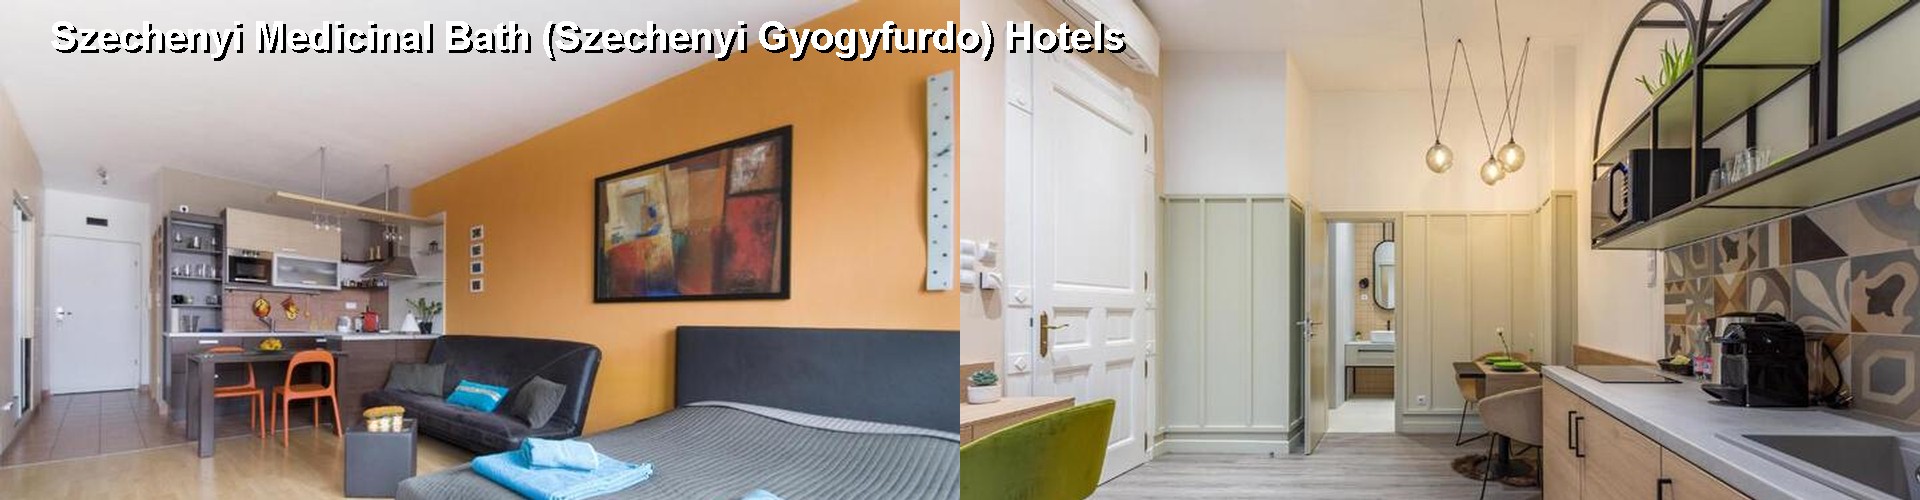 5 Best Hotels near Szechenyi Medicinal Bath (Szechenyi Gyogyfurdo)